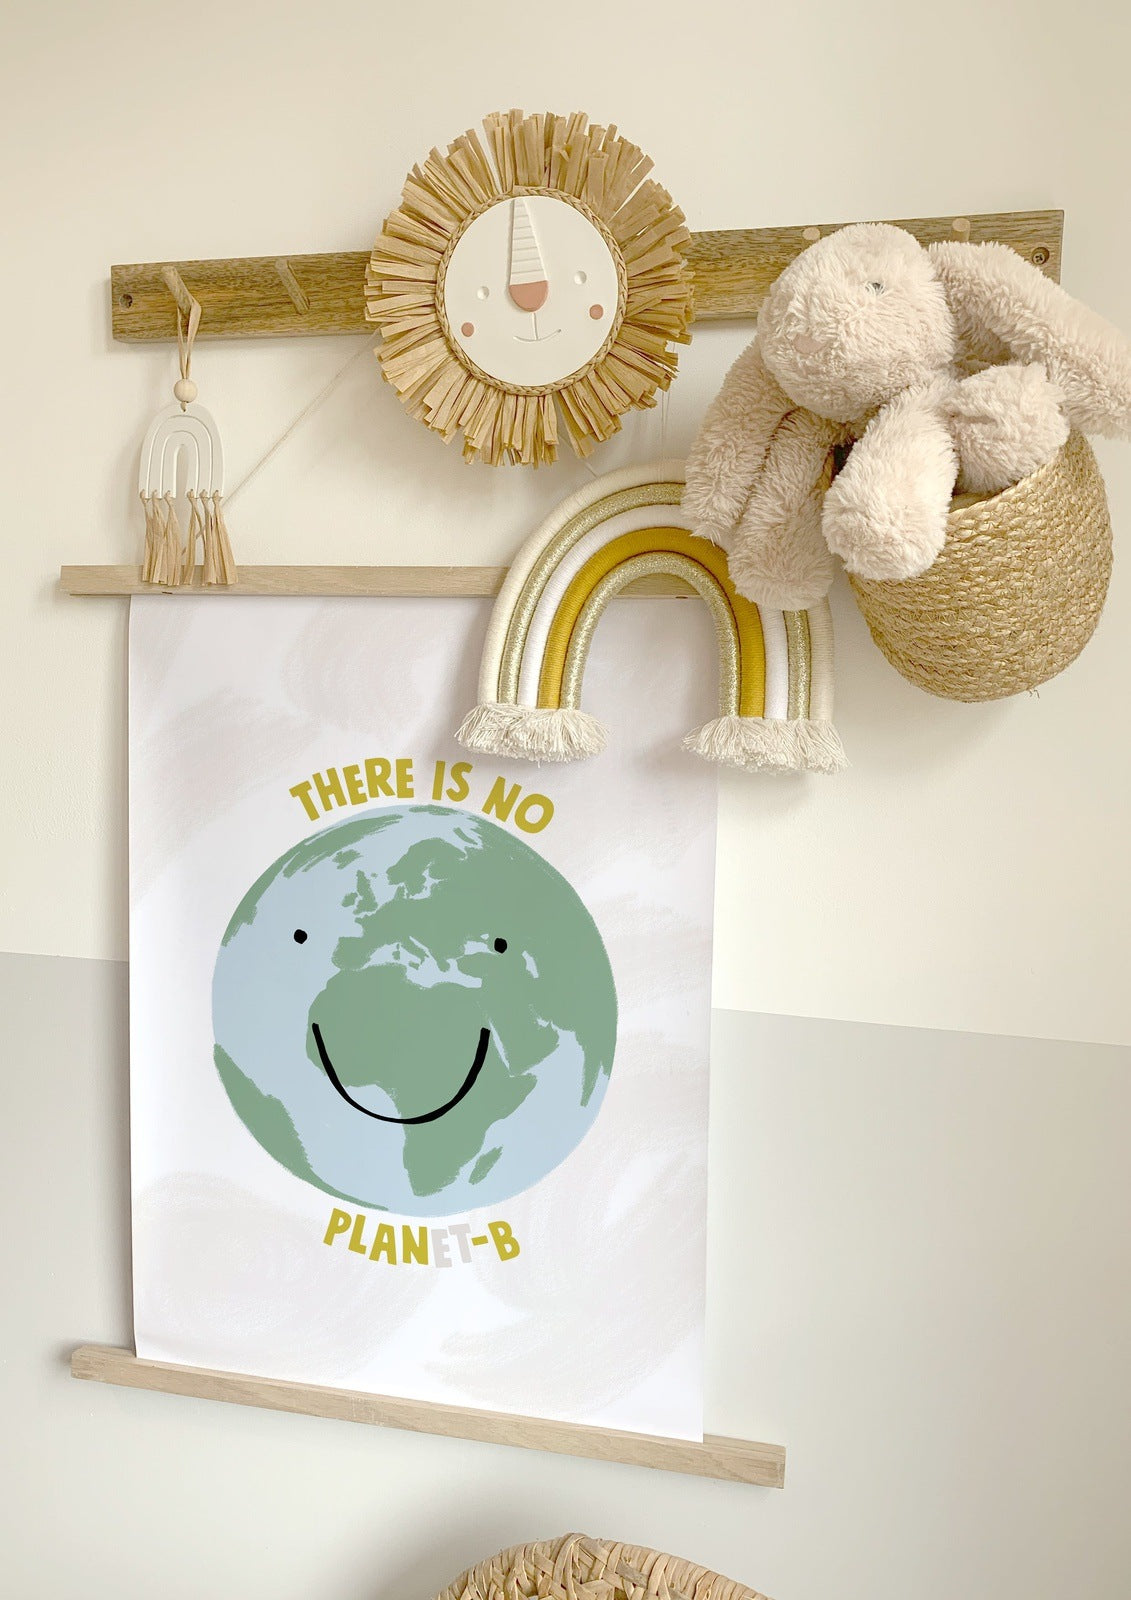 Minii & Maxii, One World A3 Print, There Is No Planet-B, Nottingham Kids Shop, Midlands Baby Shop, Children’s Nursery Print